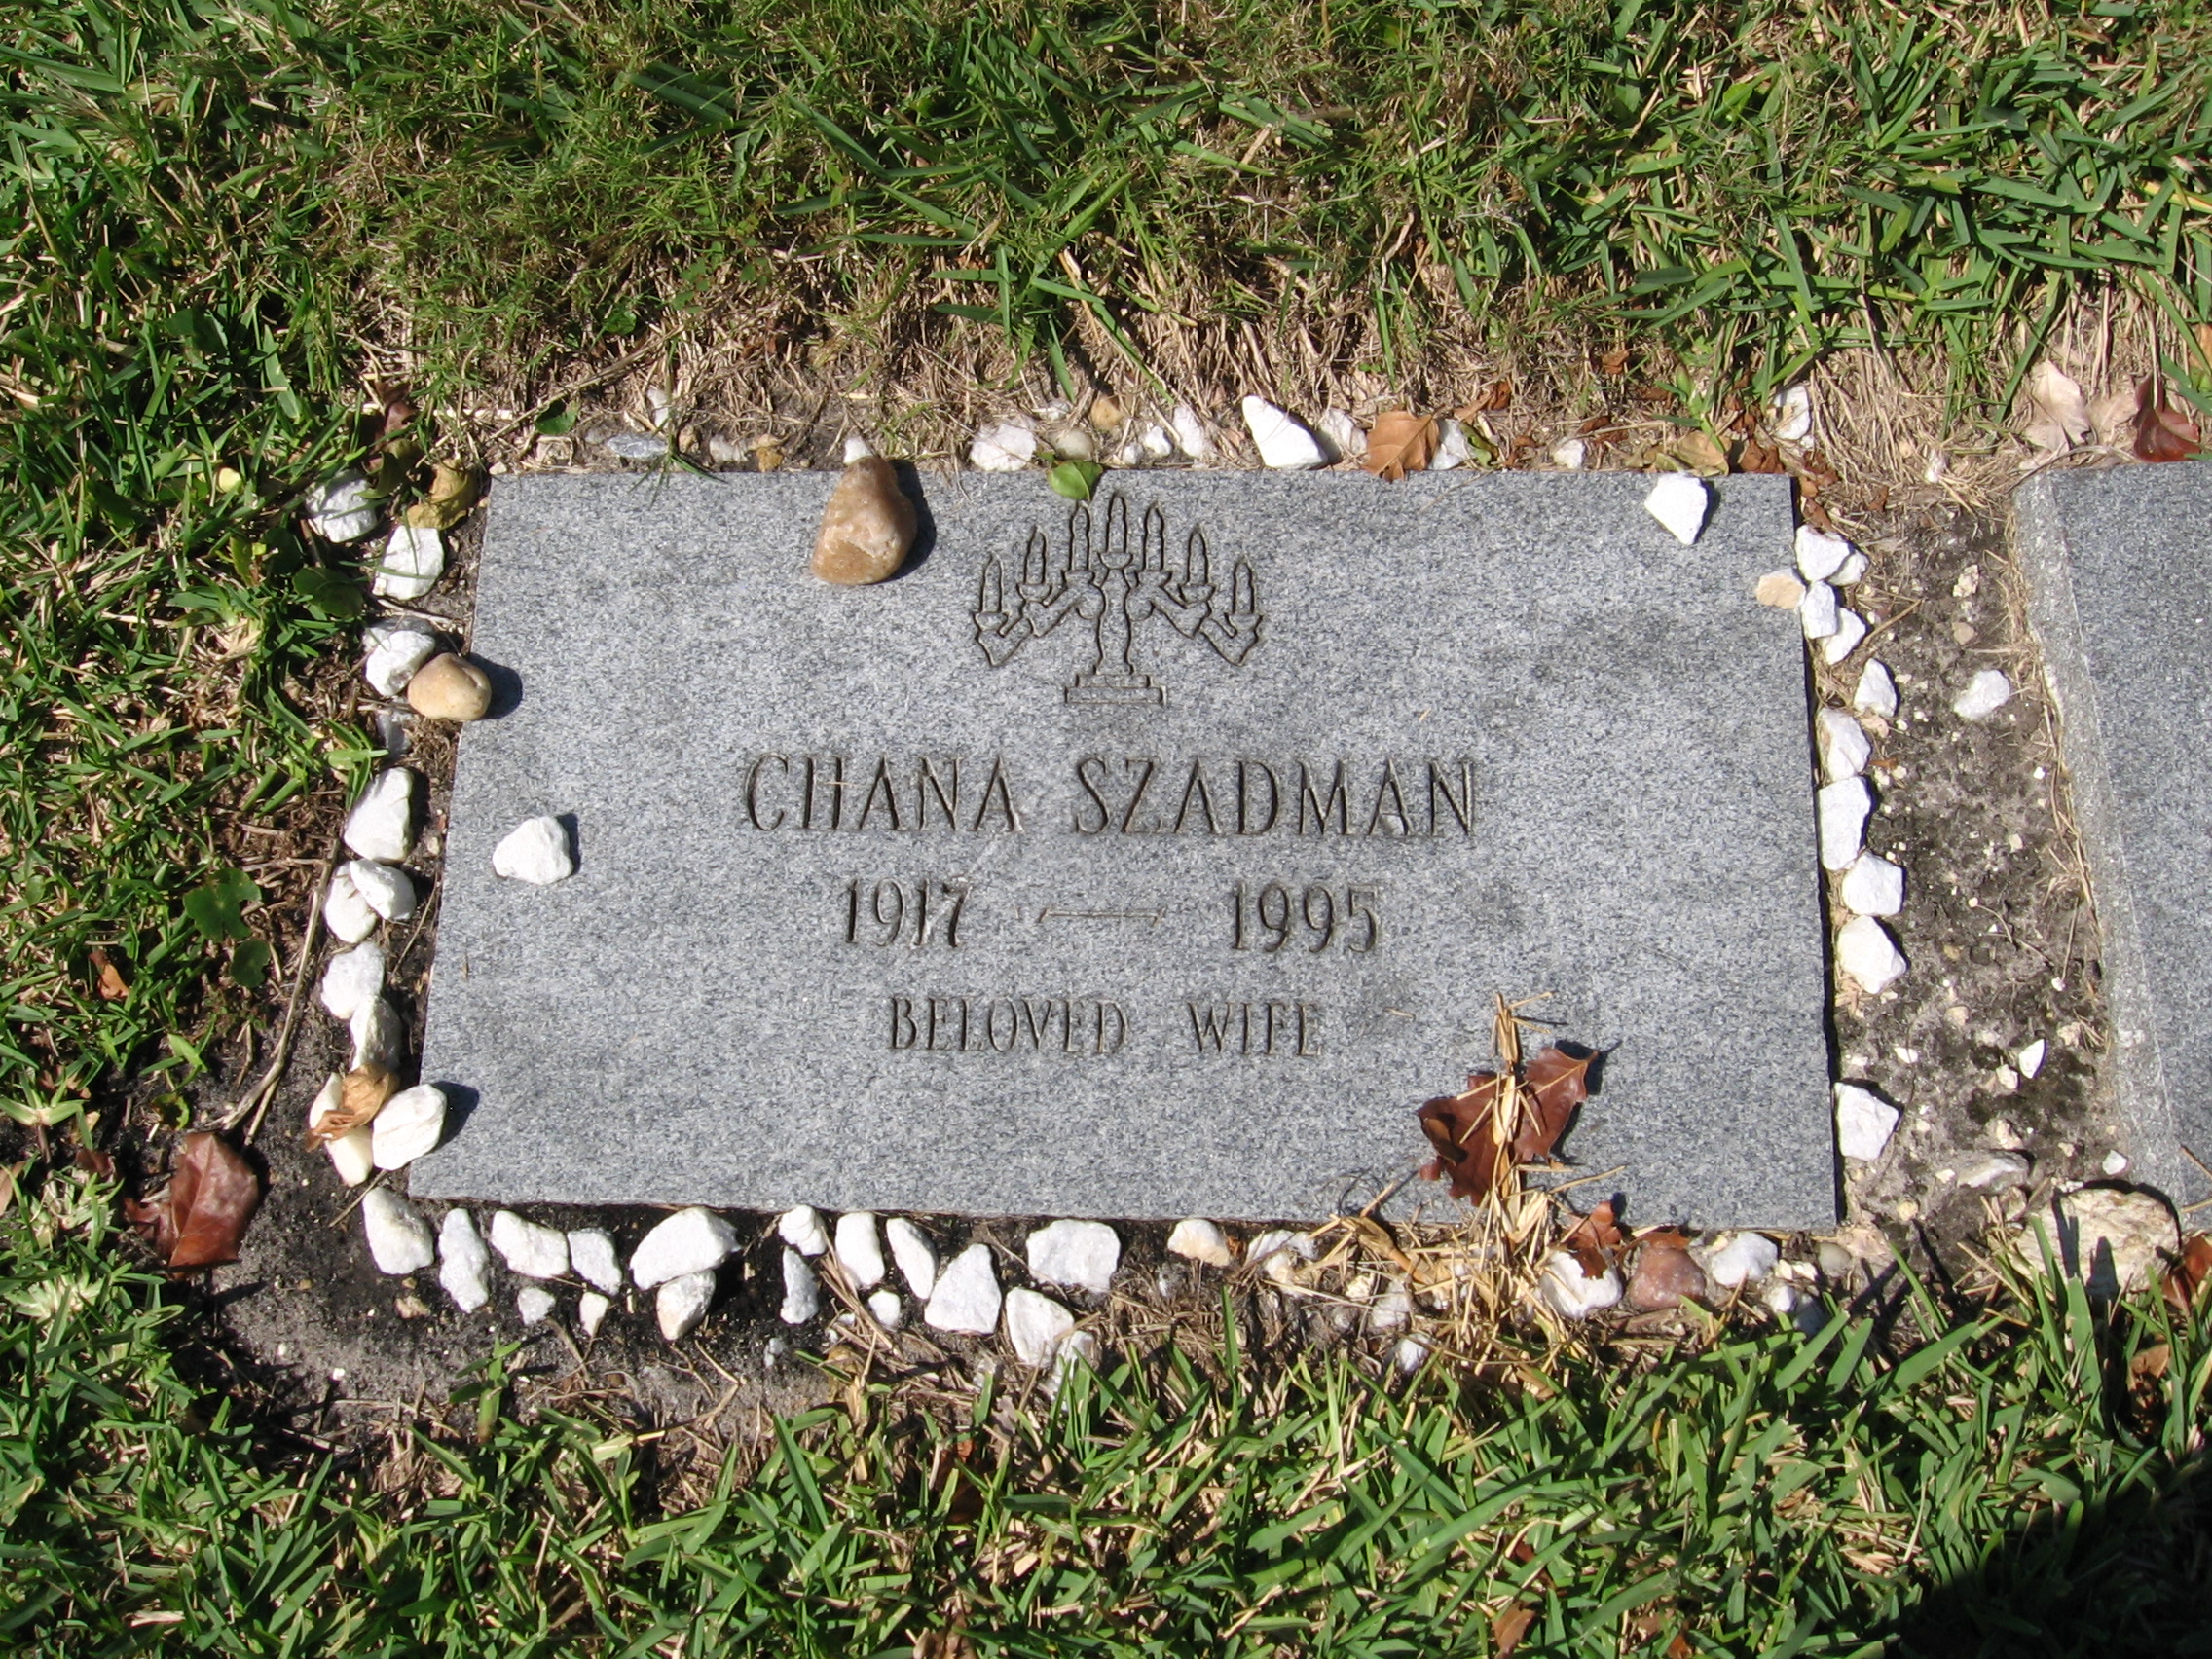 Chana Szadman